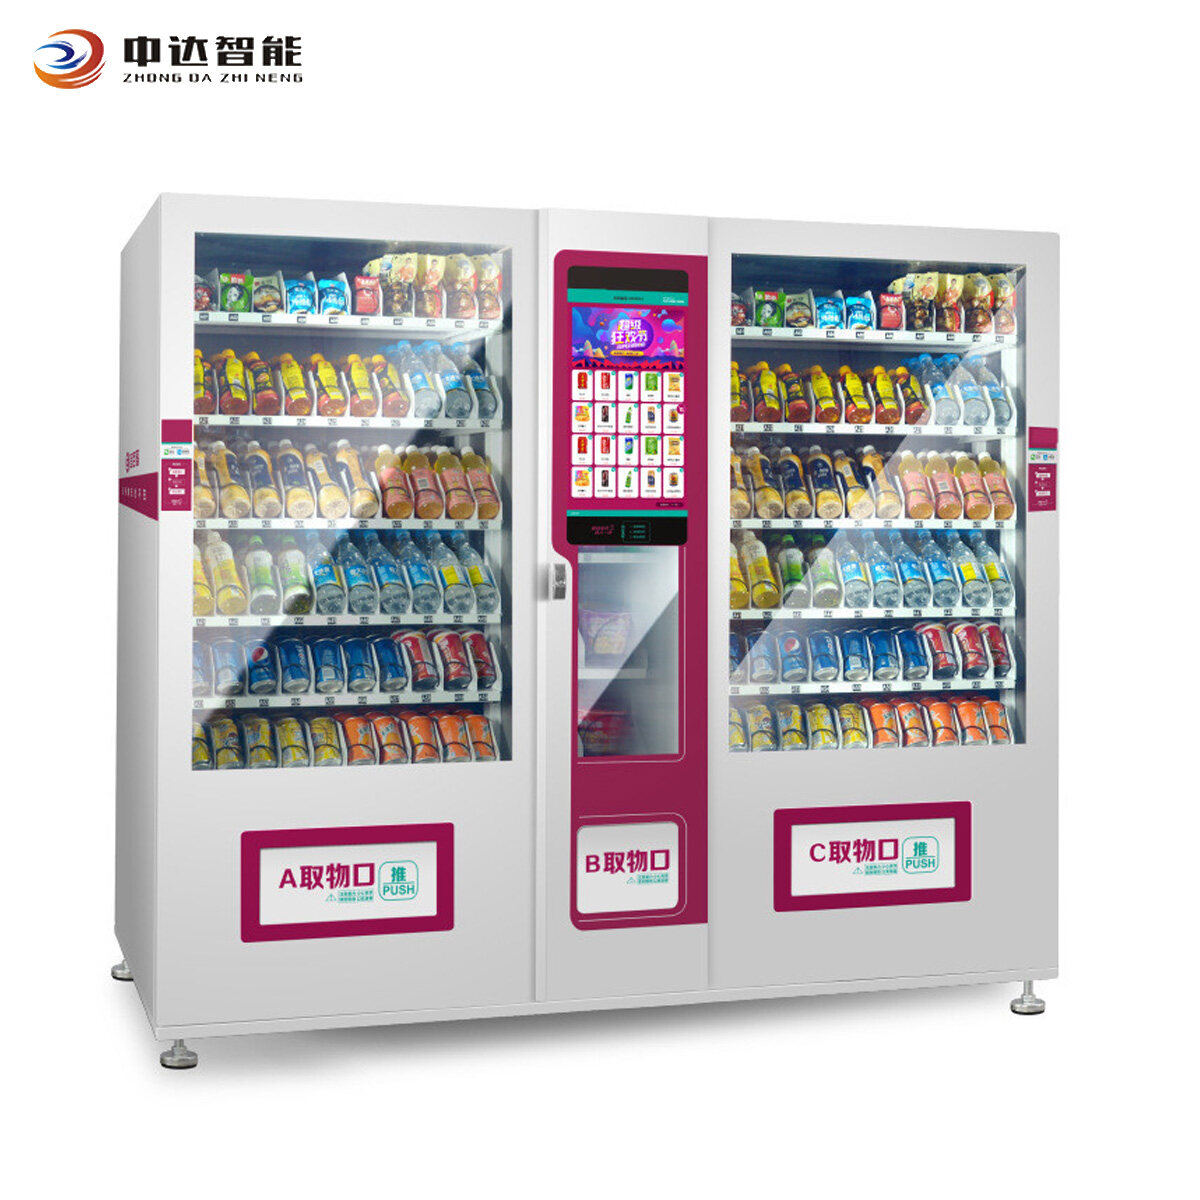 automatic beverage vending machine Sales,Wholesale vending machine soft drink,Cheap free drink vending machine,mini beverage vending machine Supply